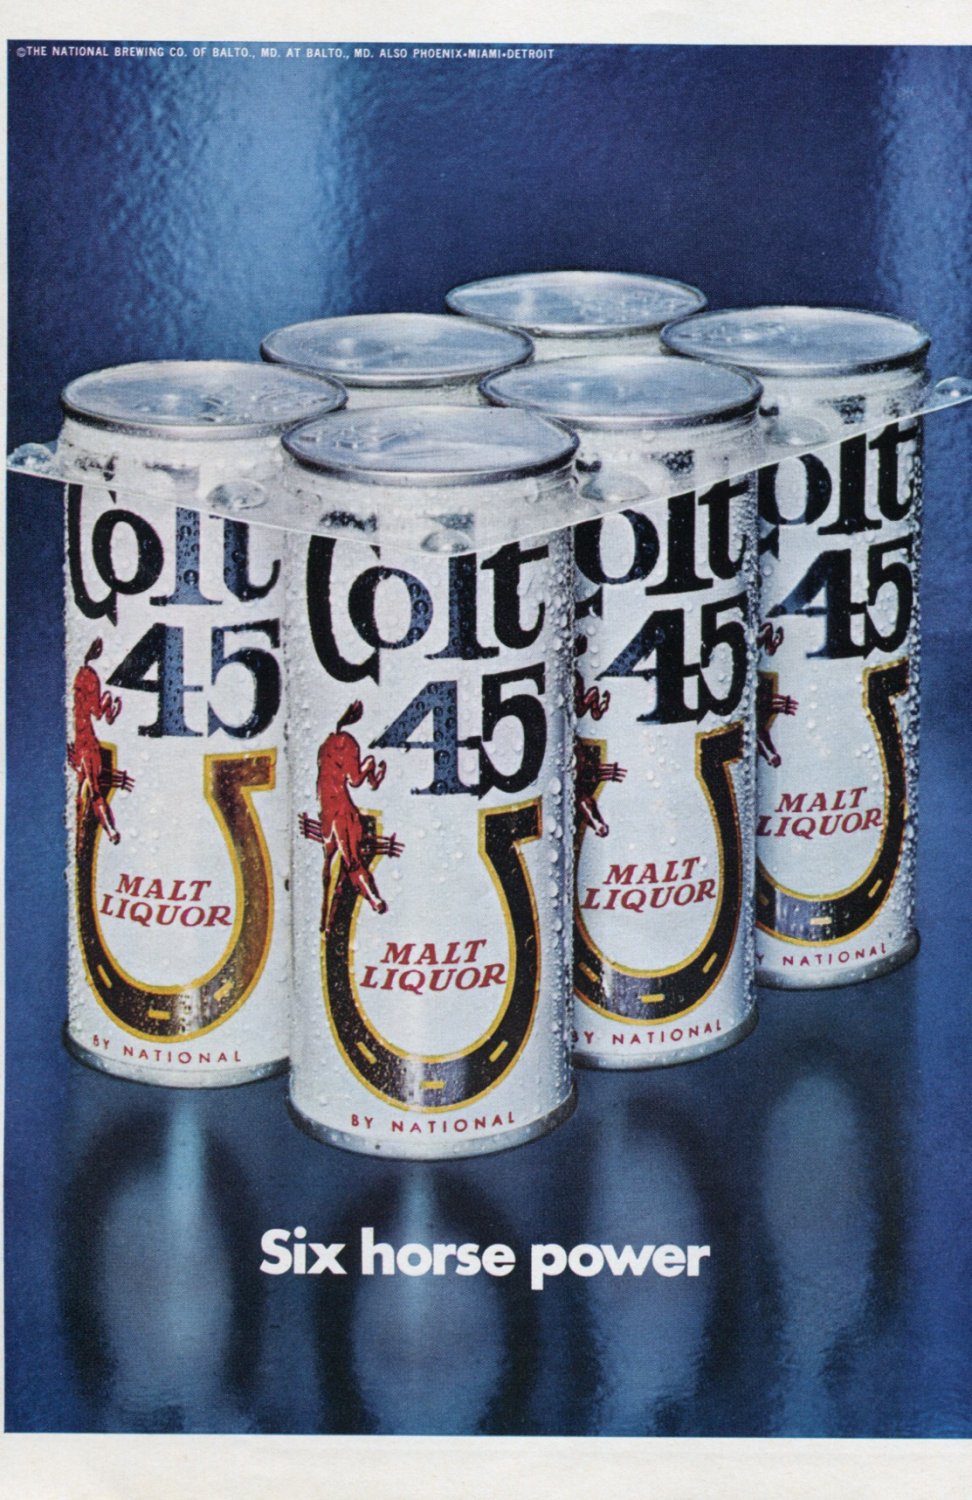 1971 Colt 45 Malt Liquor Beer Six Horse Power Advert 1971 Magazine Ad  National Brewing Co MD